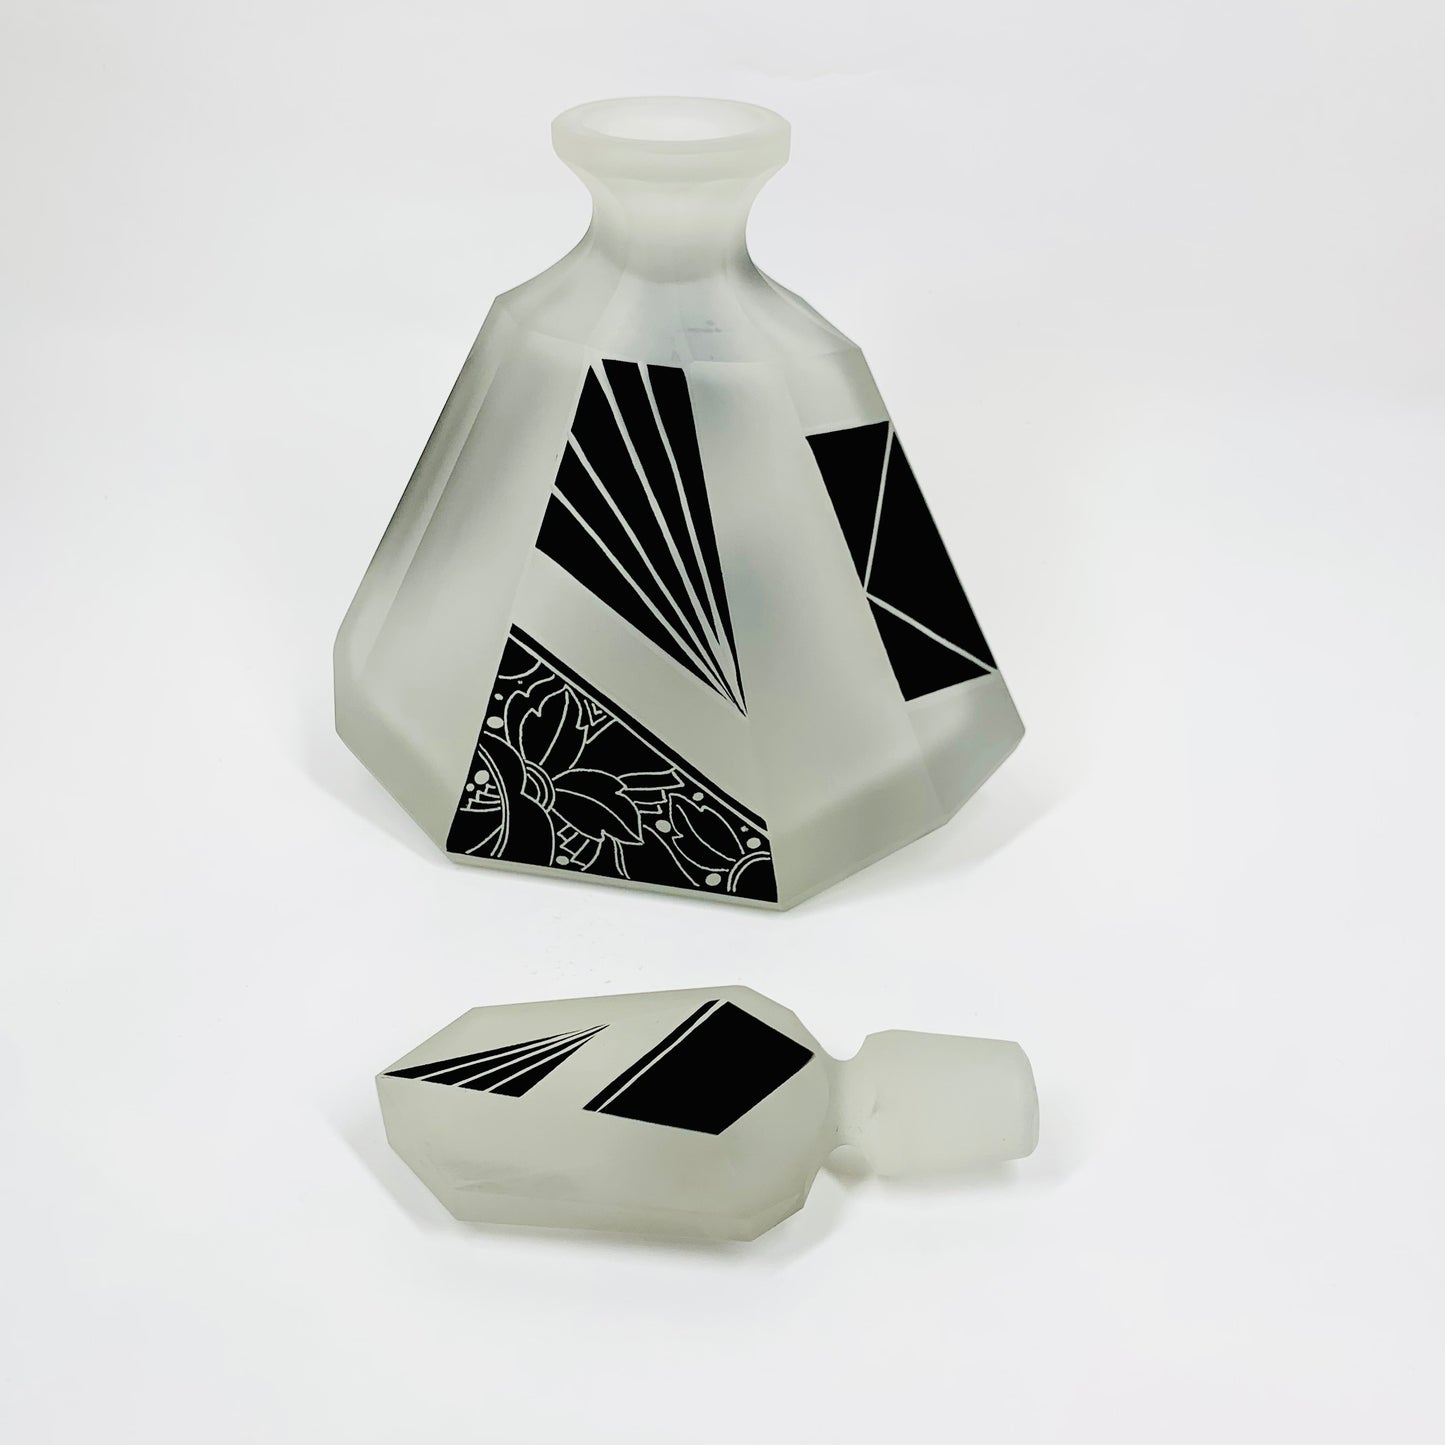 Extremely extremely rare antique Art Deco black enamel decanter satin glass set by Karl Palda